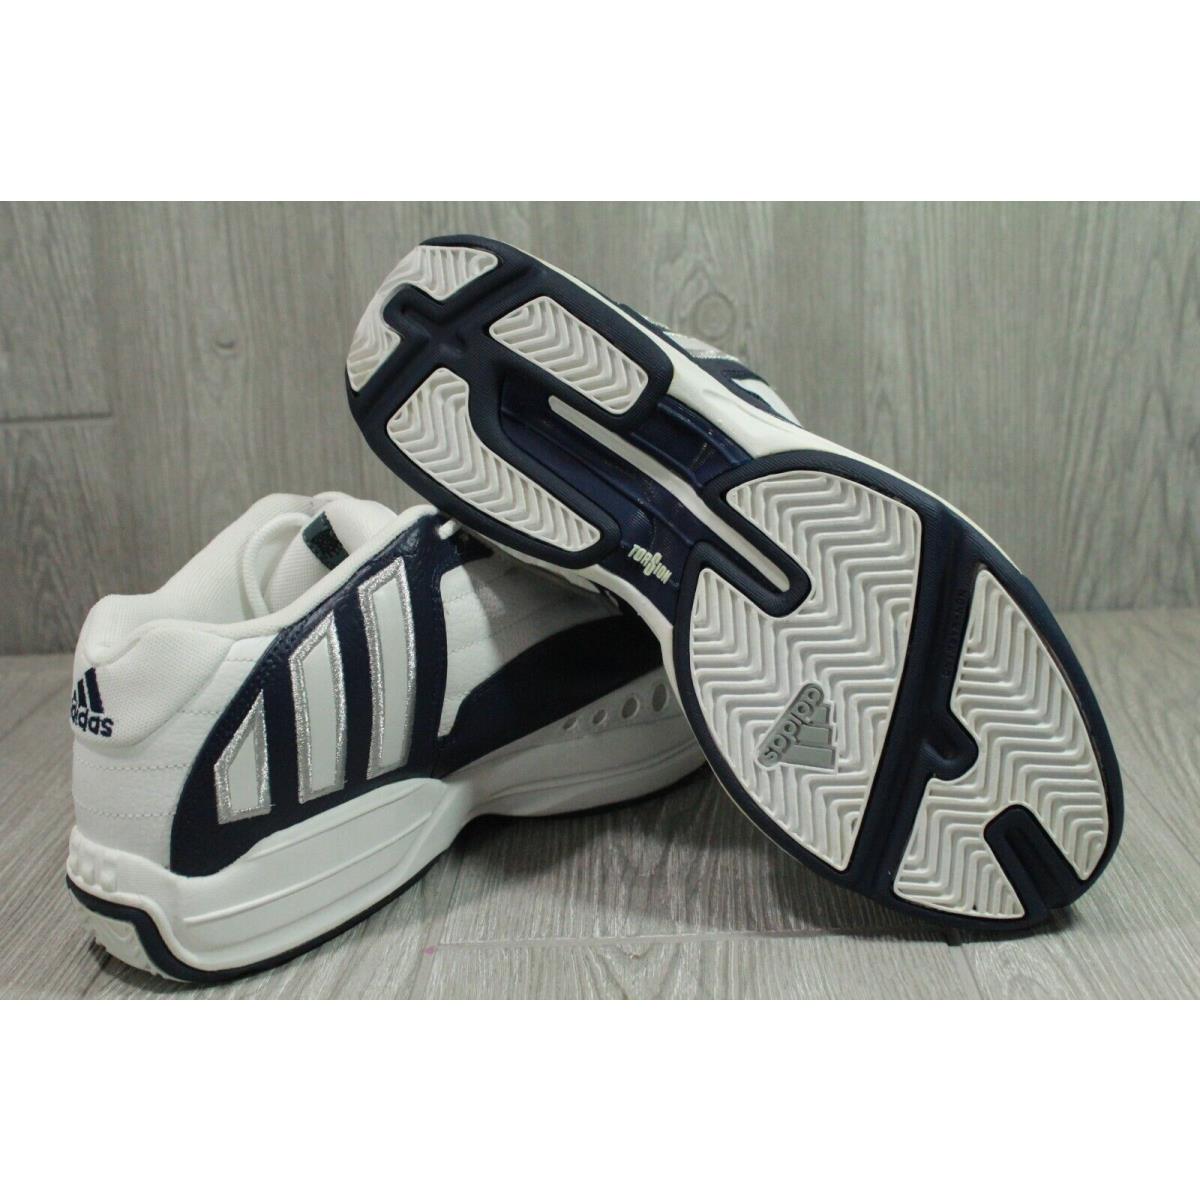 Adidas shoes Vintage - White 4